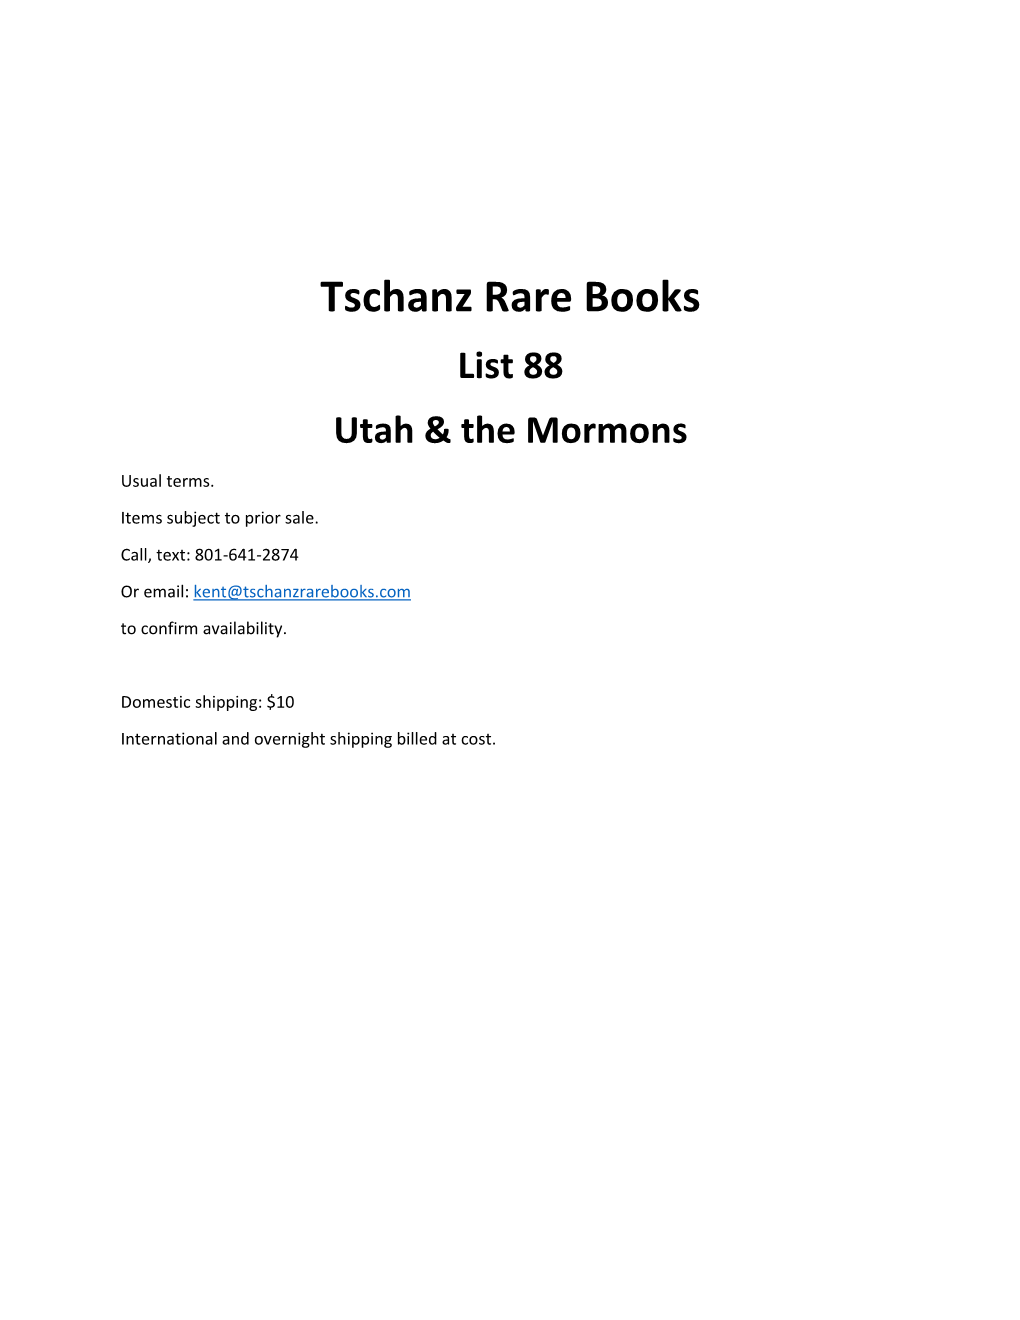 List 88: Utah and the Mormons